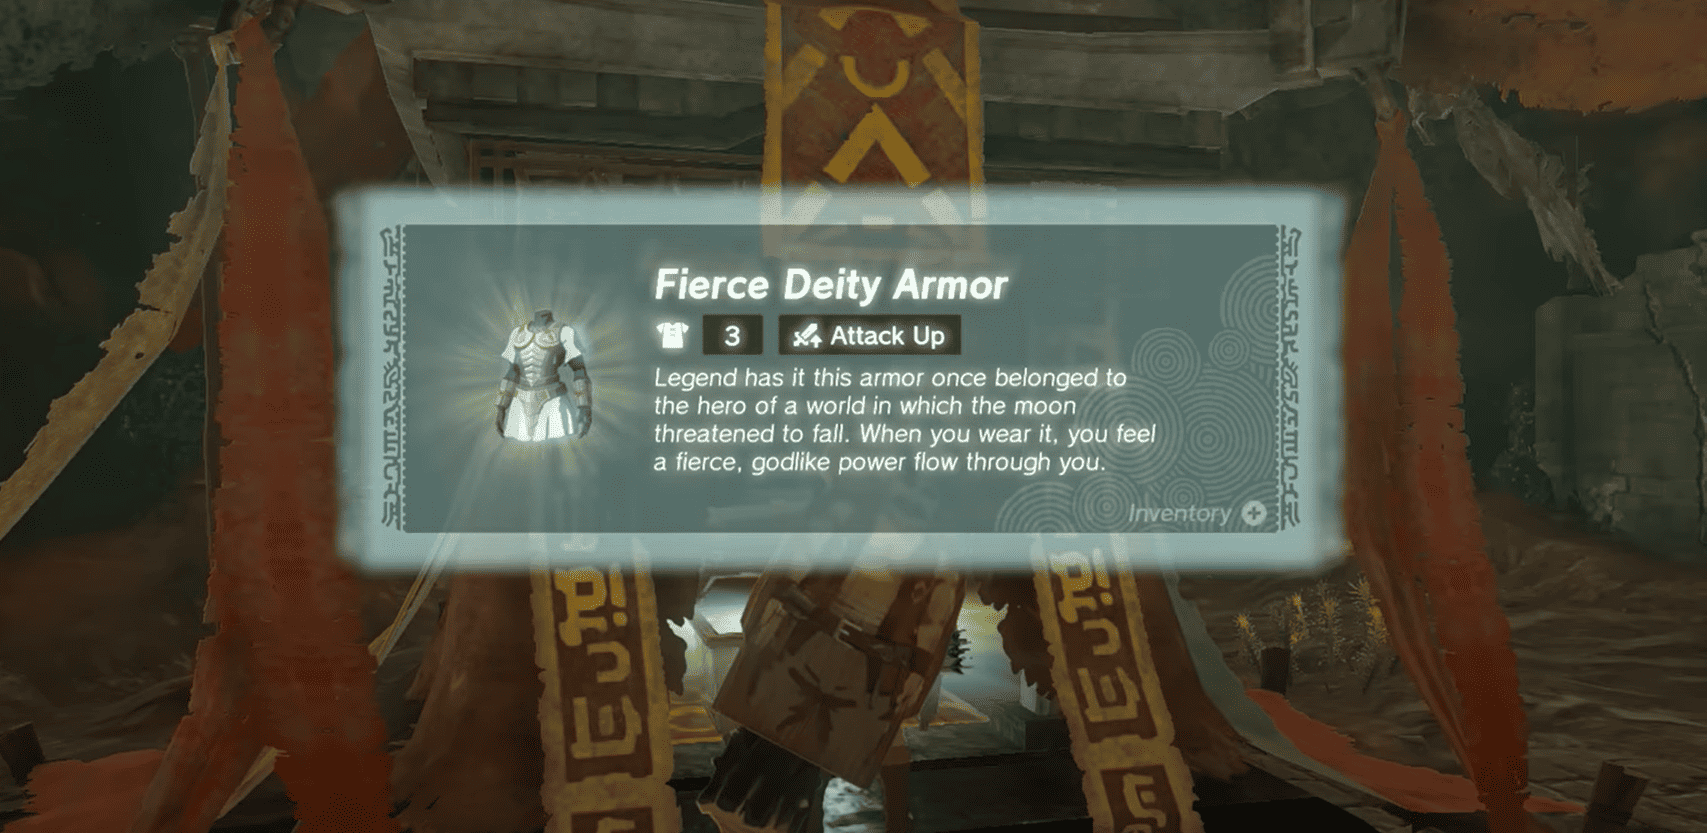 open the gate to find the Fierce Deity Armor